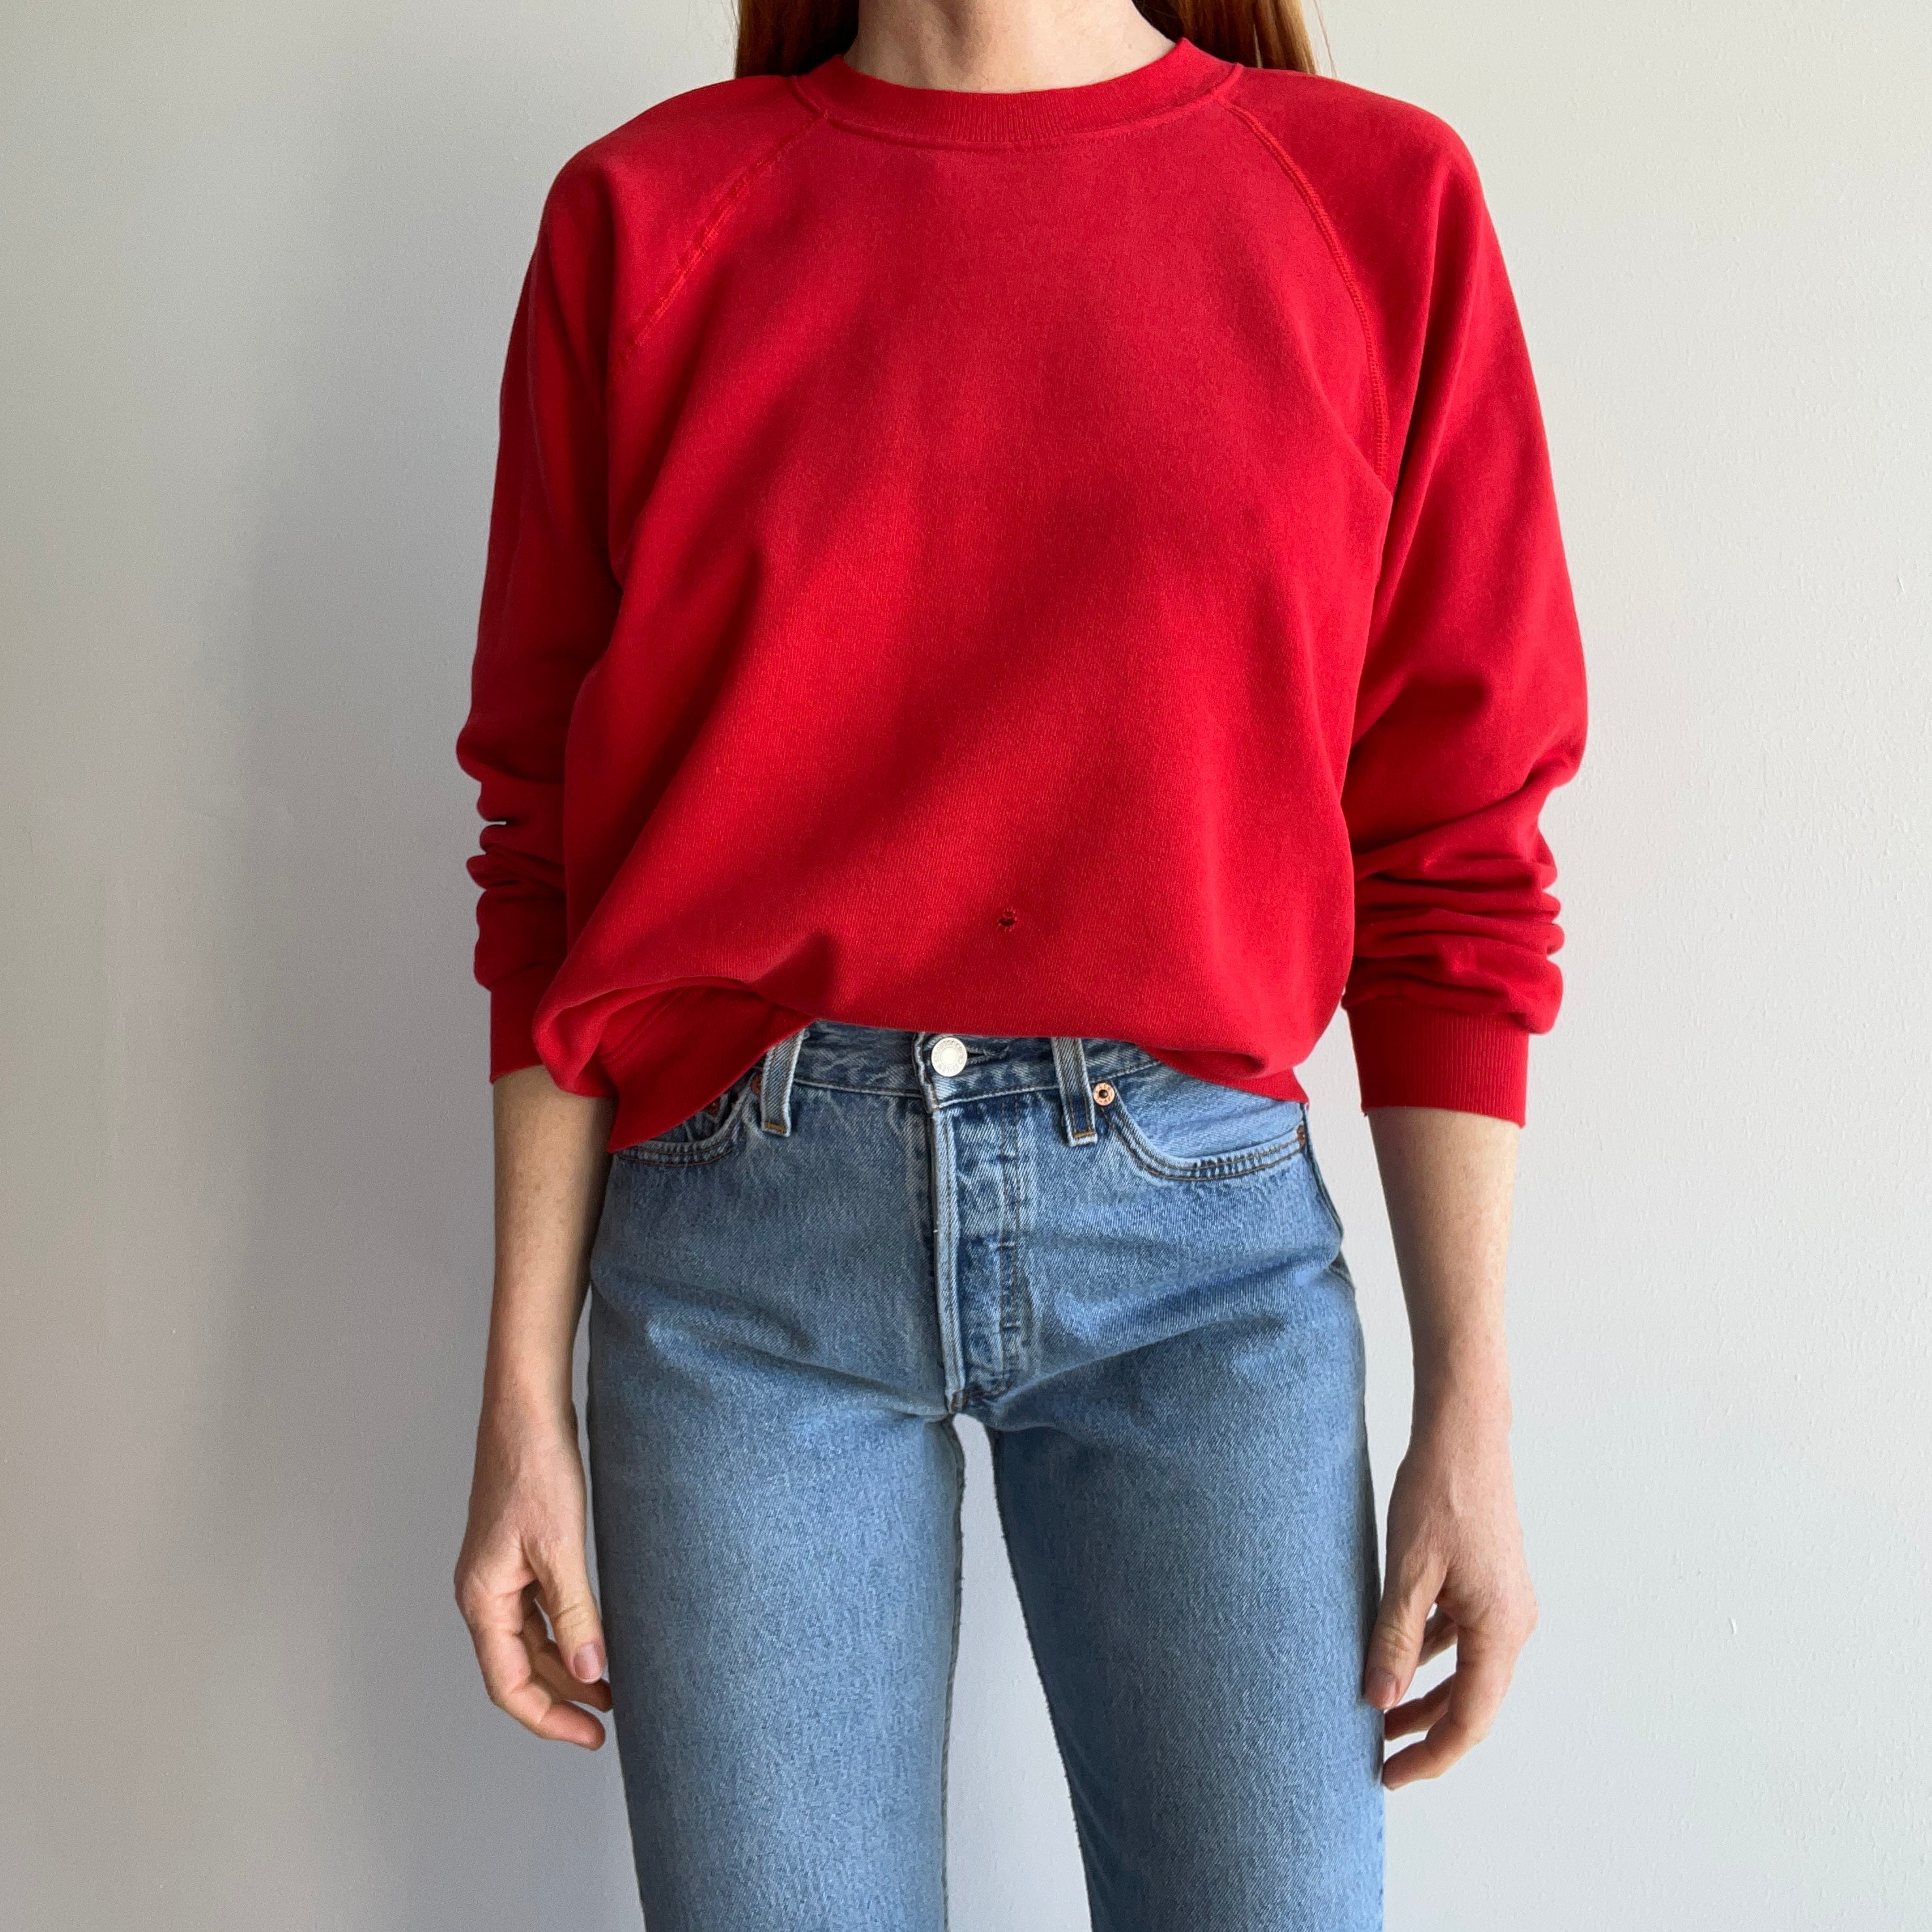 NOS Deadstock Hanes Her Way Vintage Sweatshirt Red Soft 80s 90s Cotton  Acrylic -  Canada